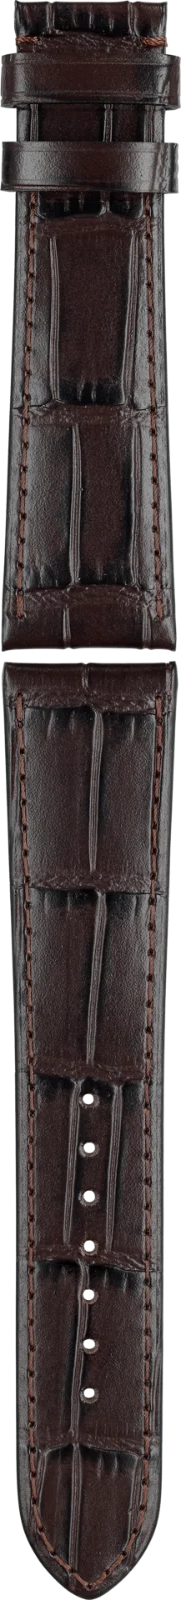 Union Glashütte crocodile pattern calfskin strap brown, stitching tone on tone